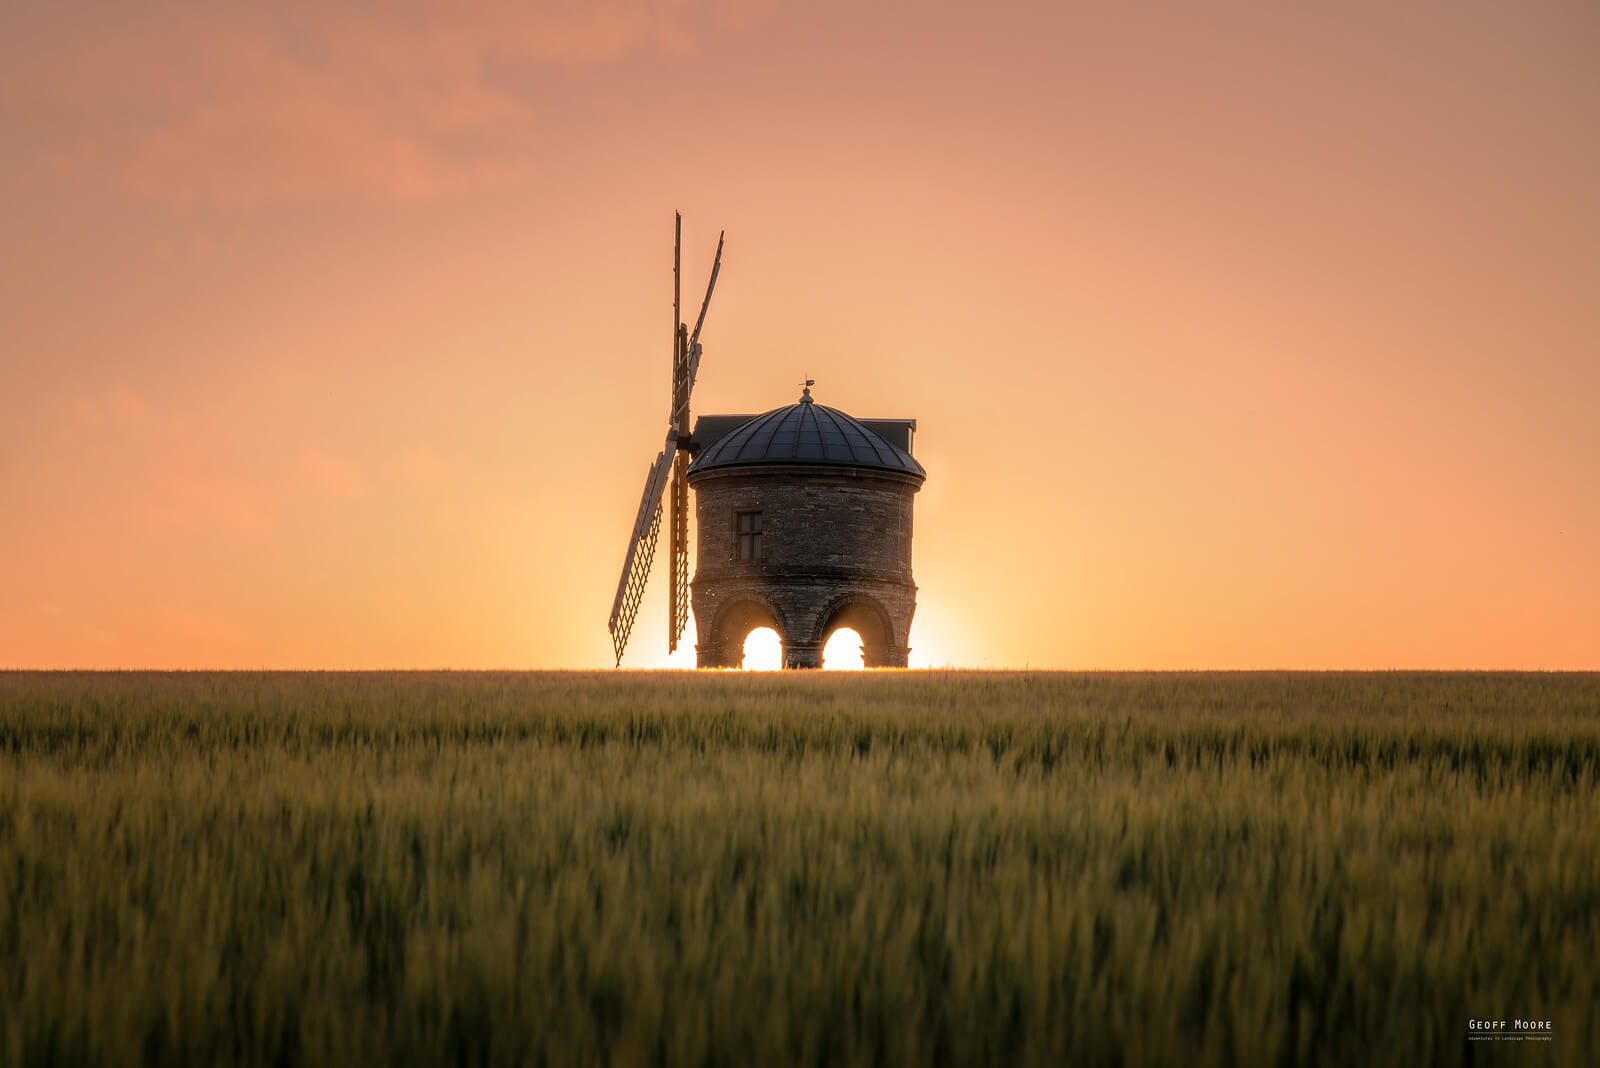 UPDATE 2020: Chesterton Windmill & The Fae